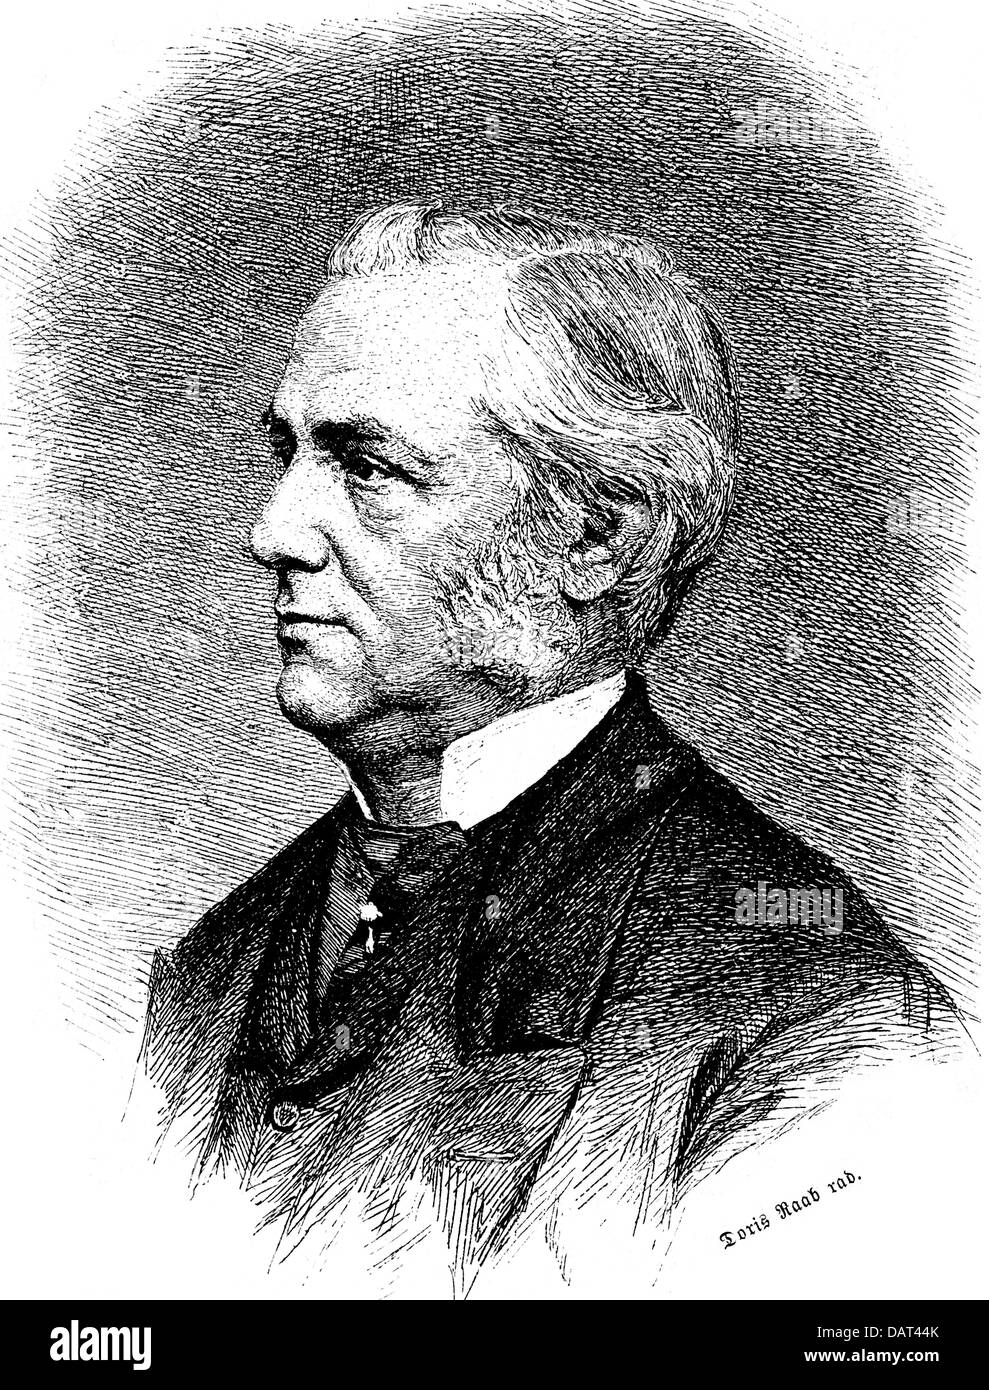 Mueller, Friedrich Max, 6.12.1823 - 28.10.1900, German indologist and religious scholar, portrait, wood engraving, circa 1900, Stock Photo